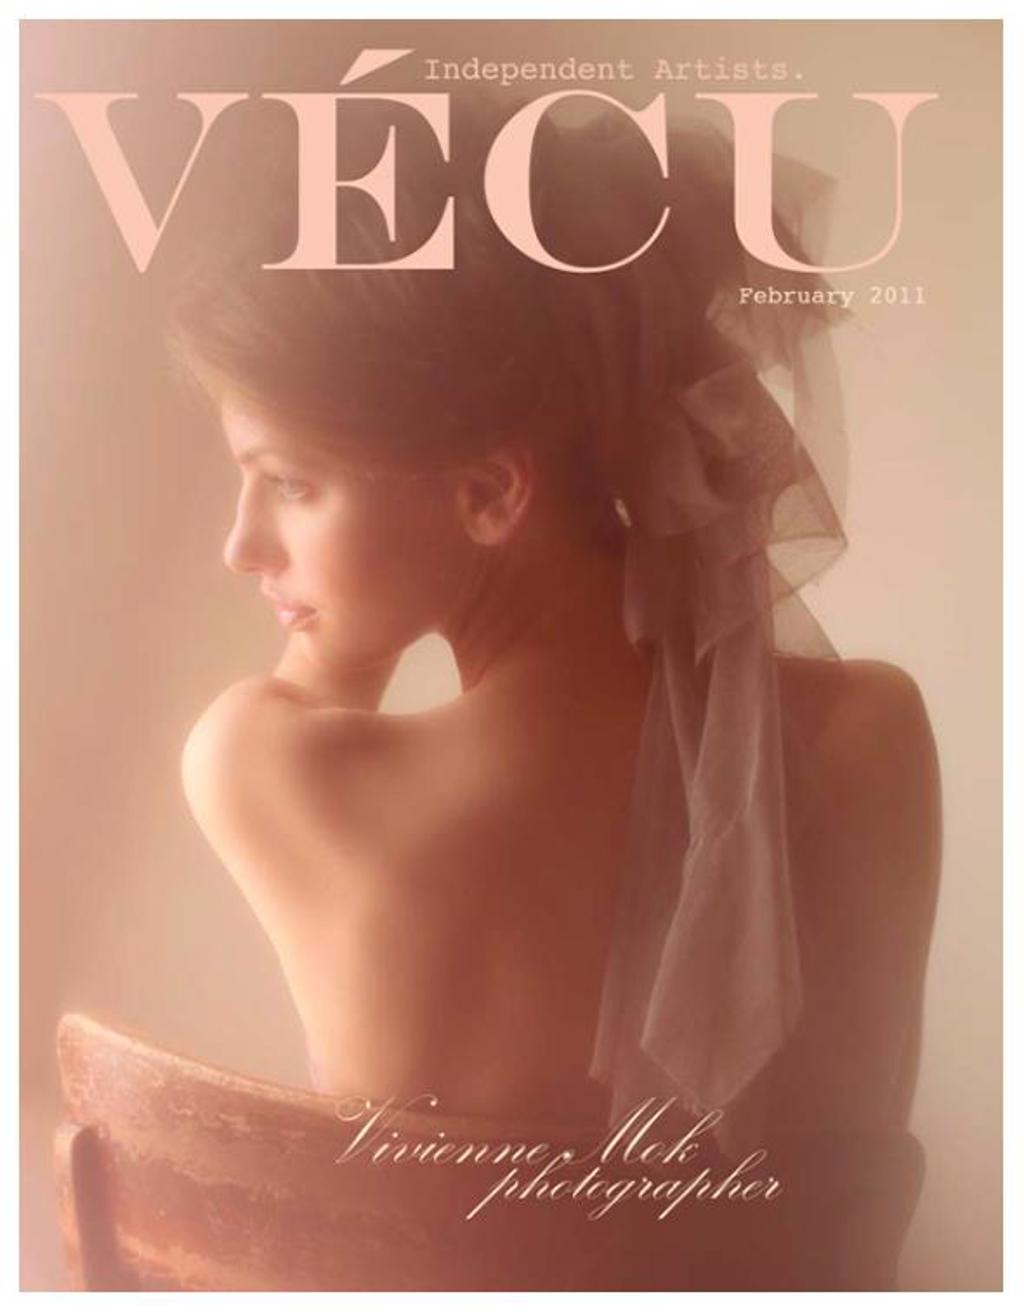 Editorials - Selected works.VECU. Magazine February 2011 - Belle de jour